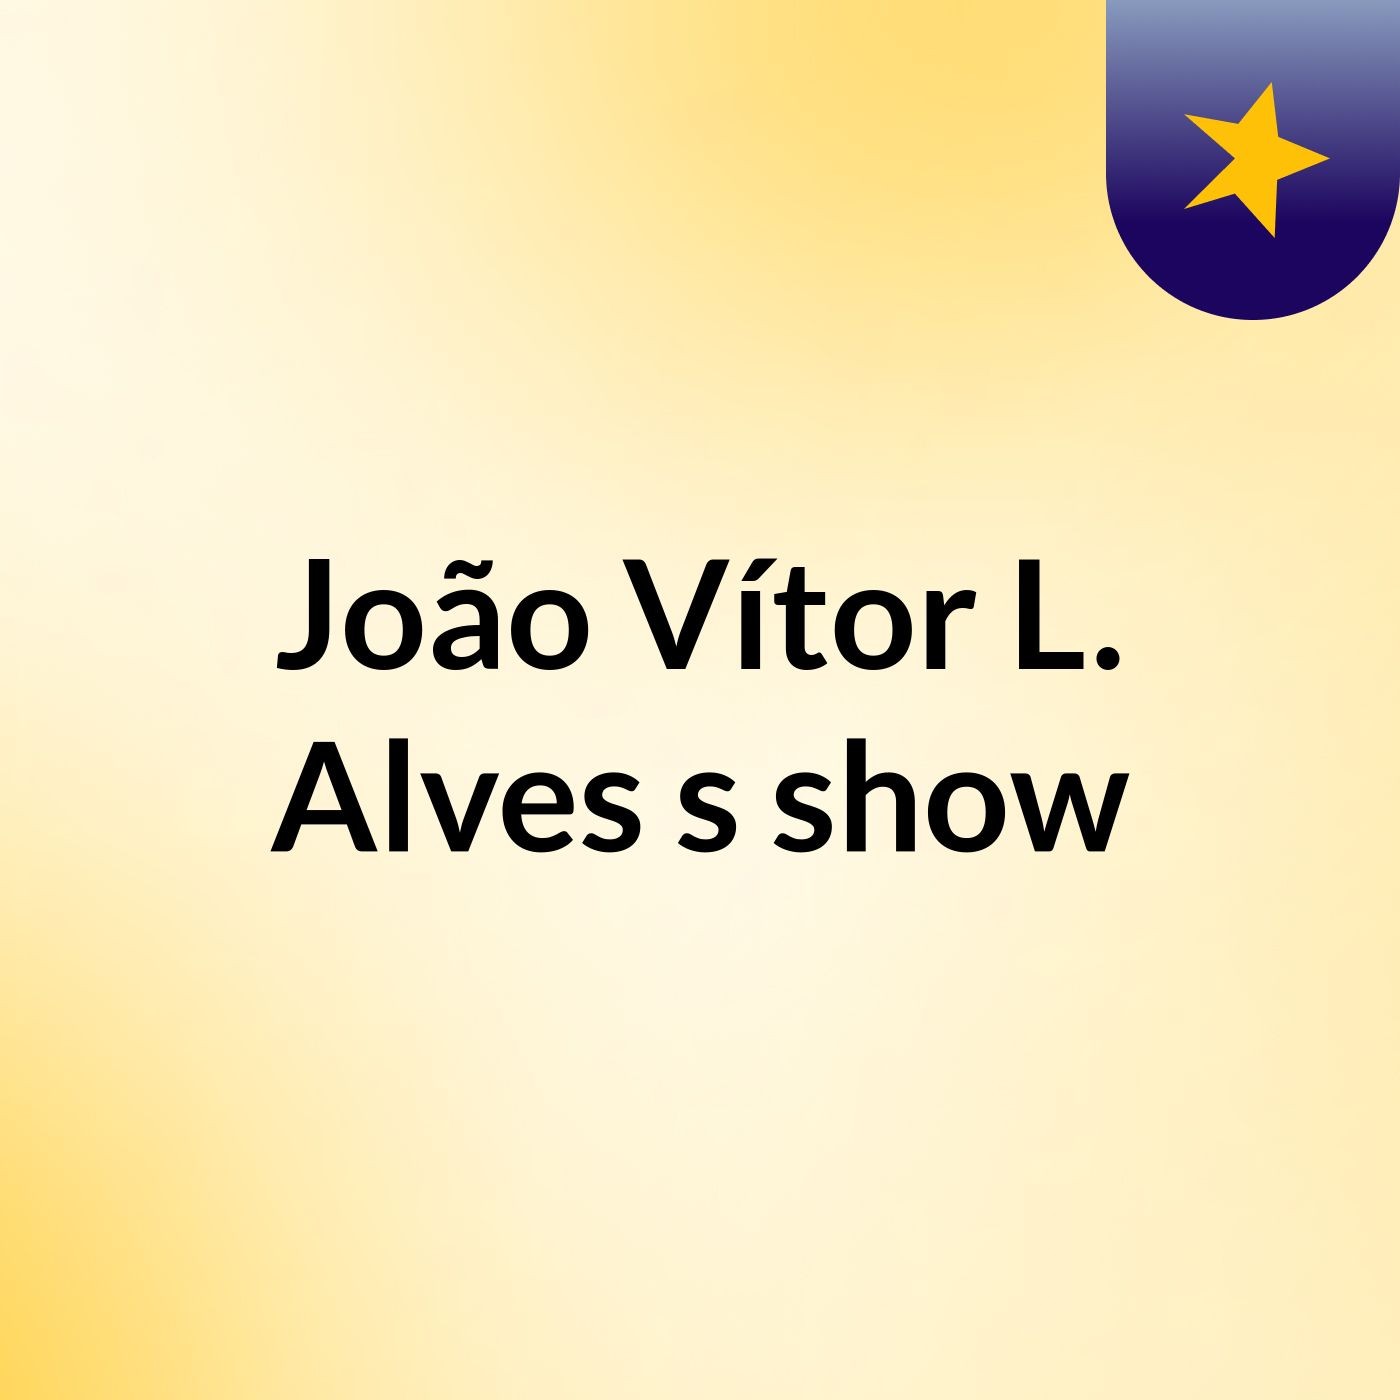 João Vítor L. Alves's show